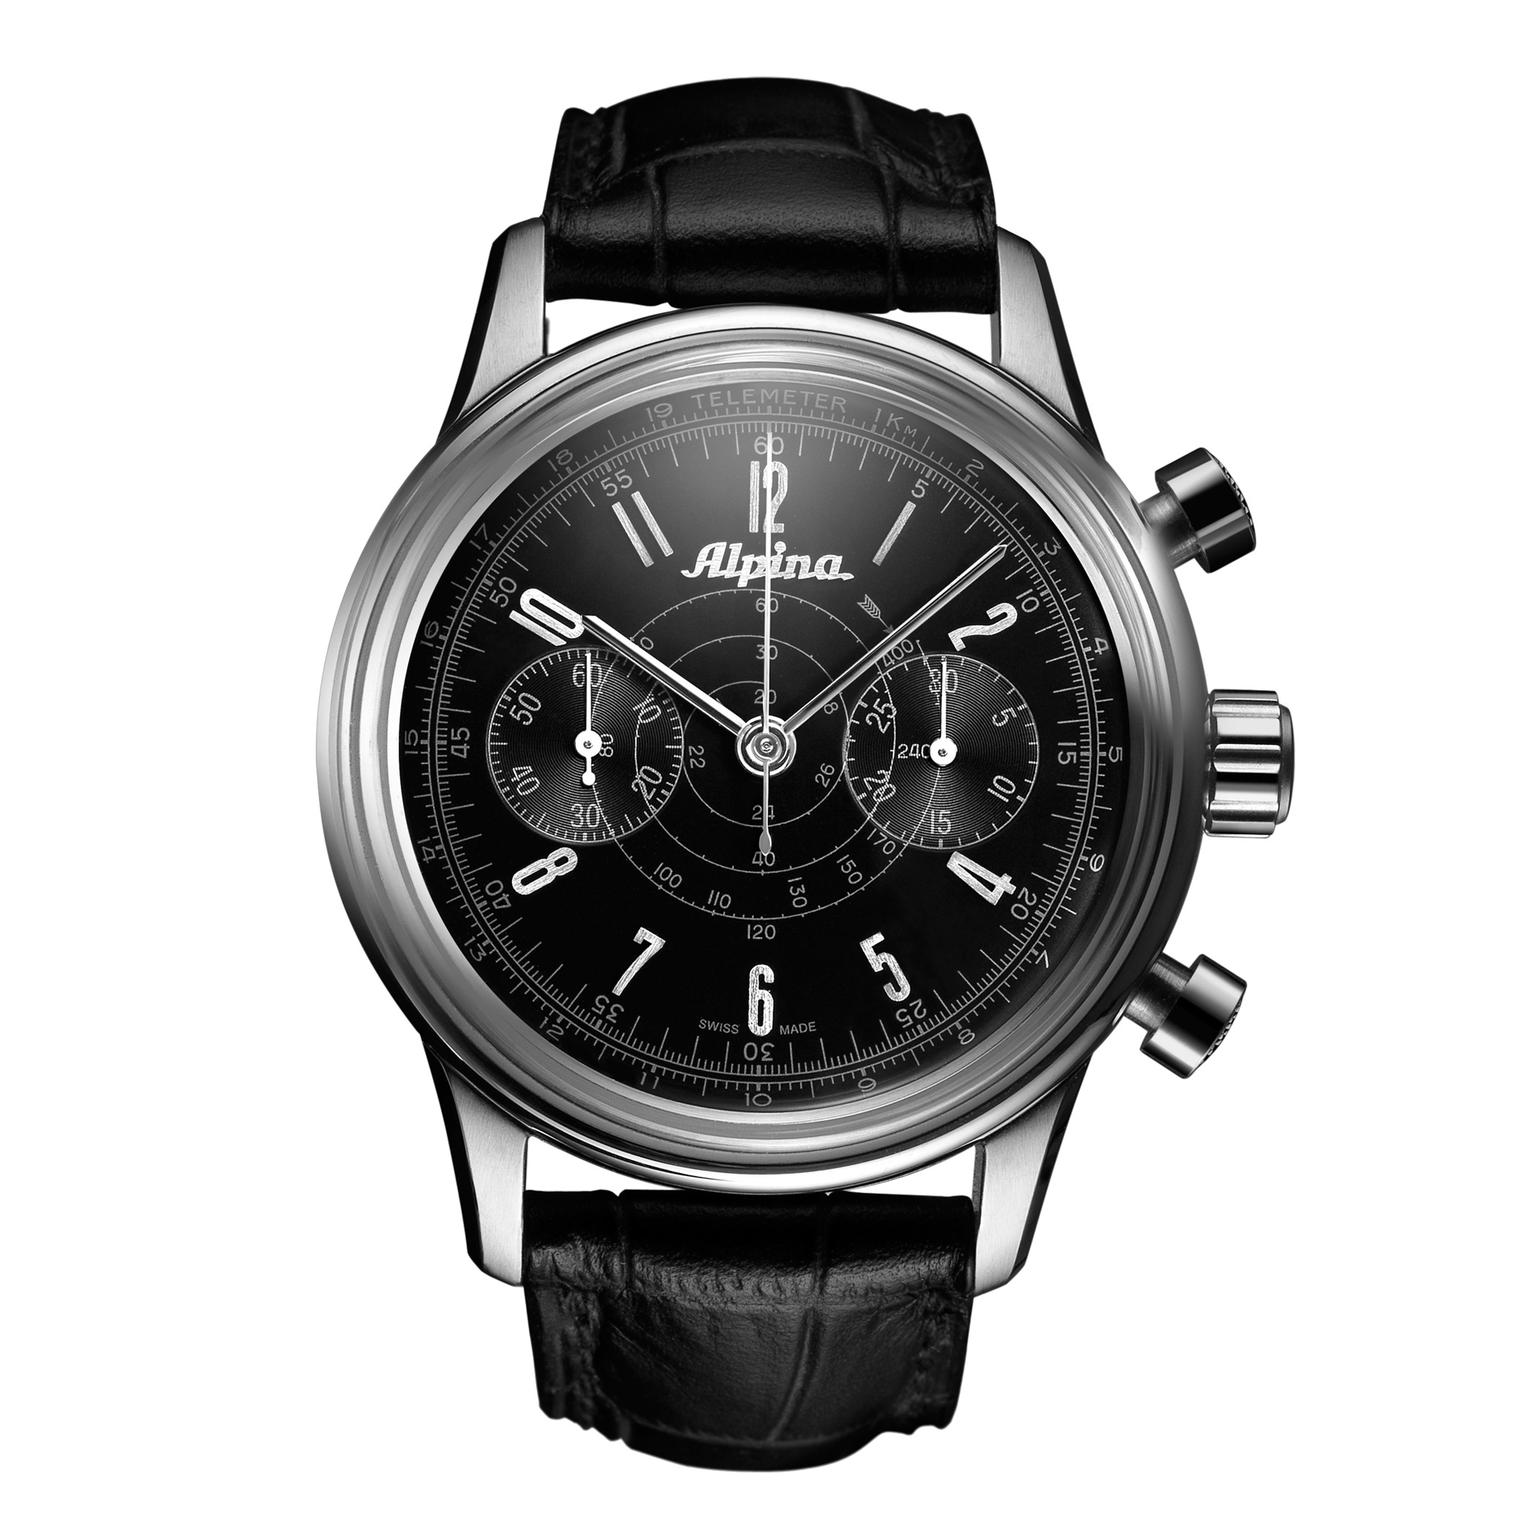 Alpina-Heritage-Pilot-Chronograph-watch-Zoom